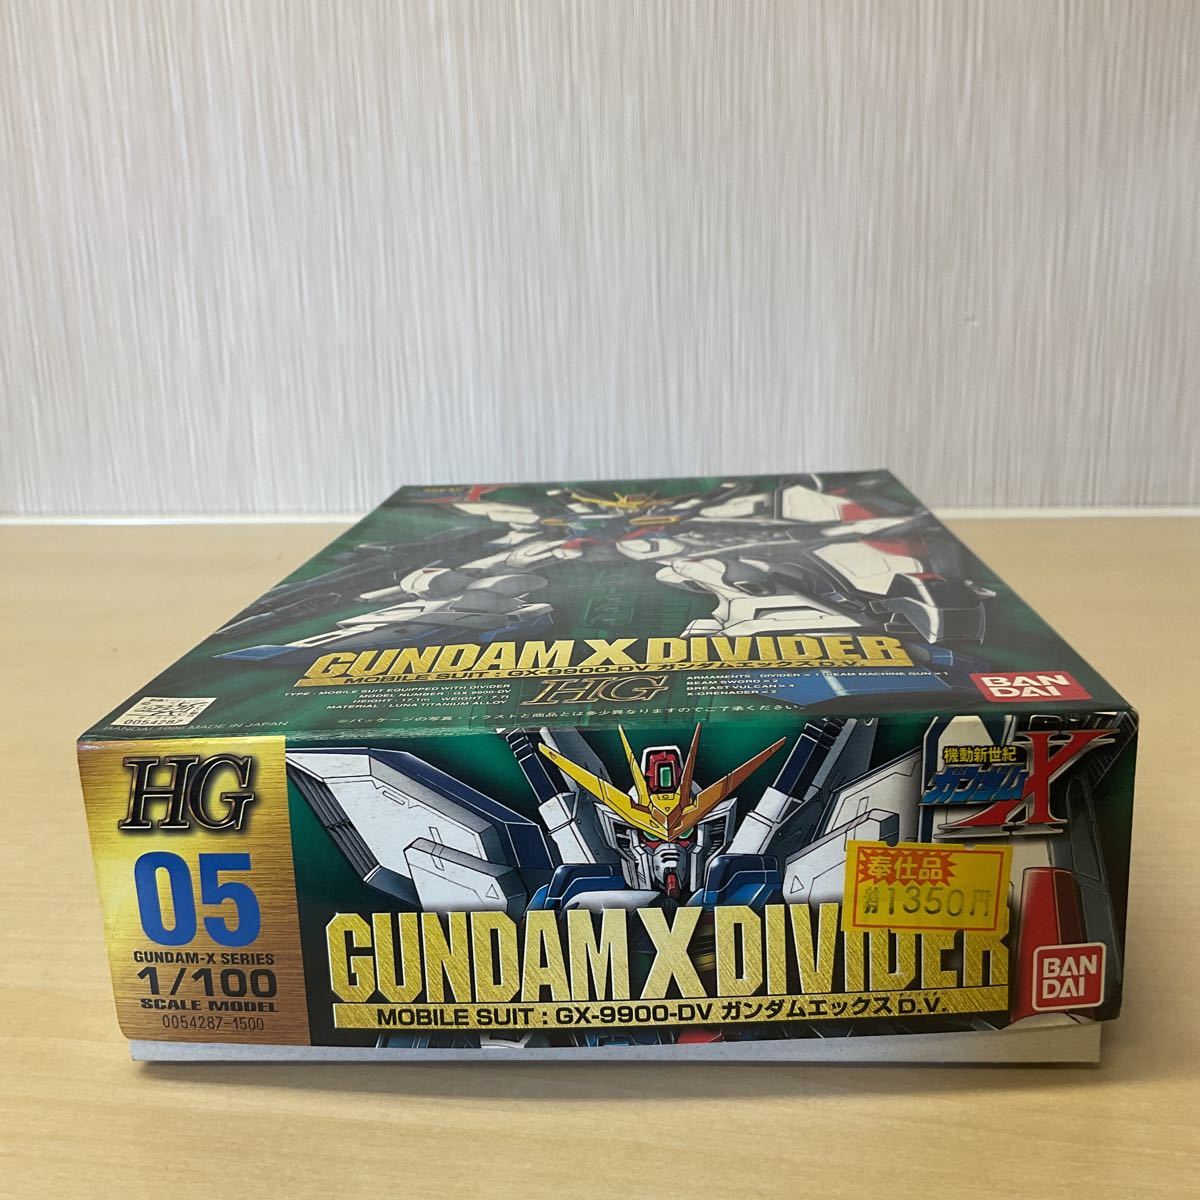 ■GA35-60Y BANDAI バンダイ 機動新世紀ガンダムX MOBILE SUIT:GX-9900-DV ガンダムエックスD.V. GUNDAM-X SERIES 1/100未組立 プラモデル_画像6